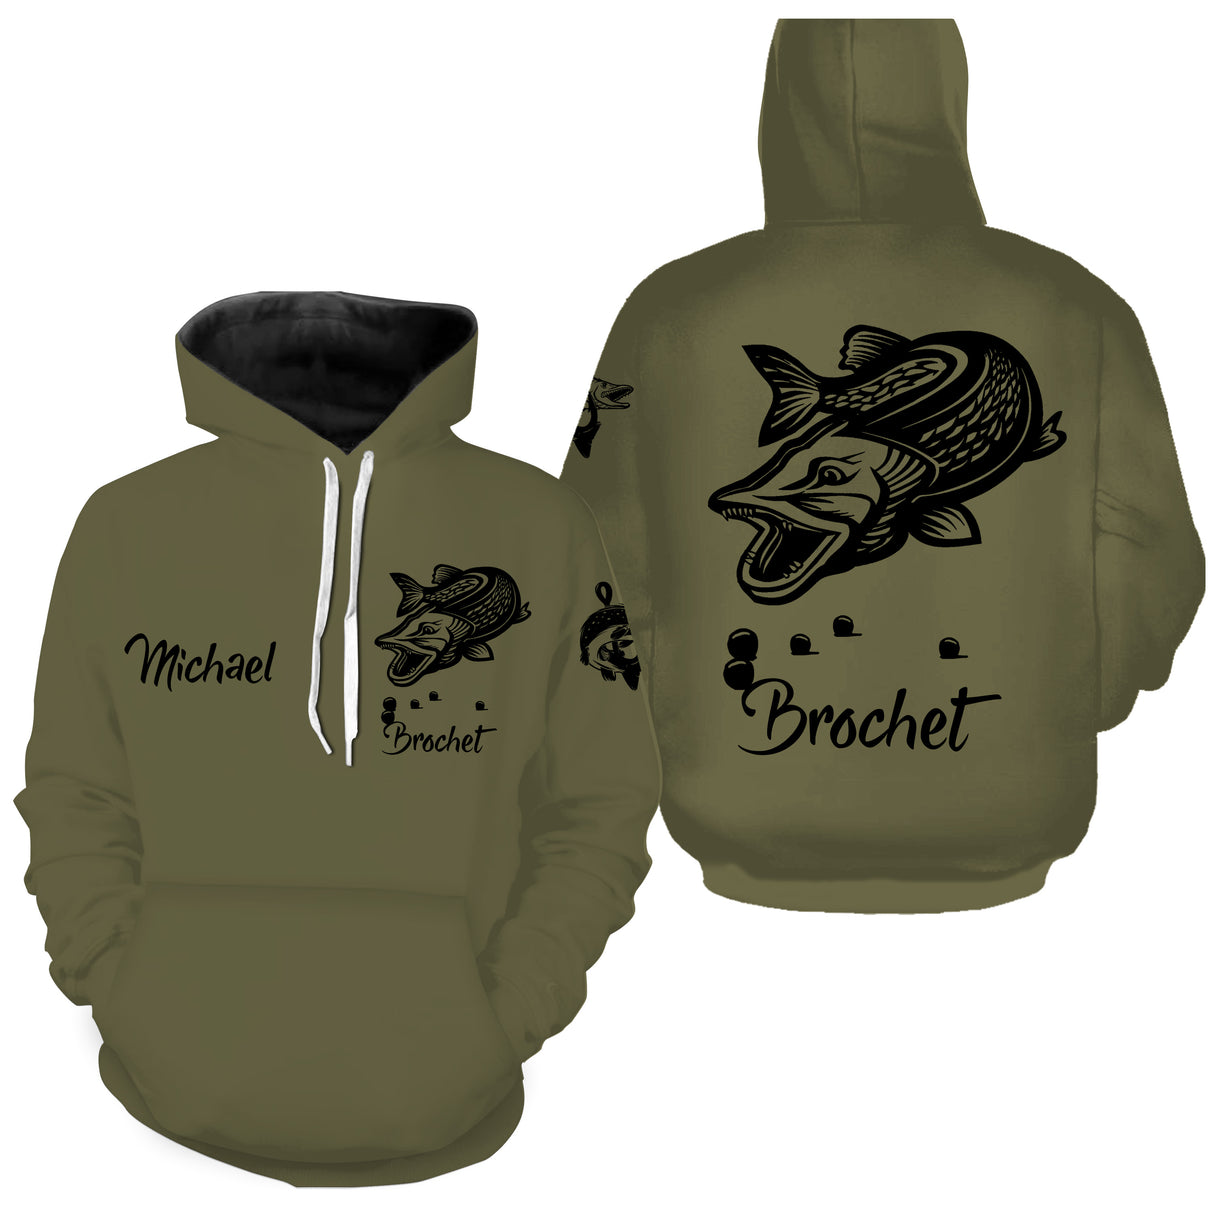 Pike Fishing, Predator Fishing, Original Fisherman Gift, T-Shirt, Hooded Sweatshirt, Anti UV Clothing, Personalized Gift for Fishing - CTS15042233